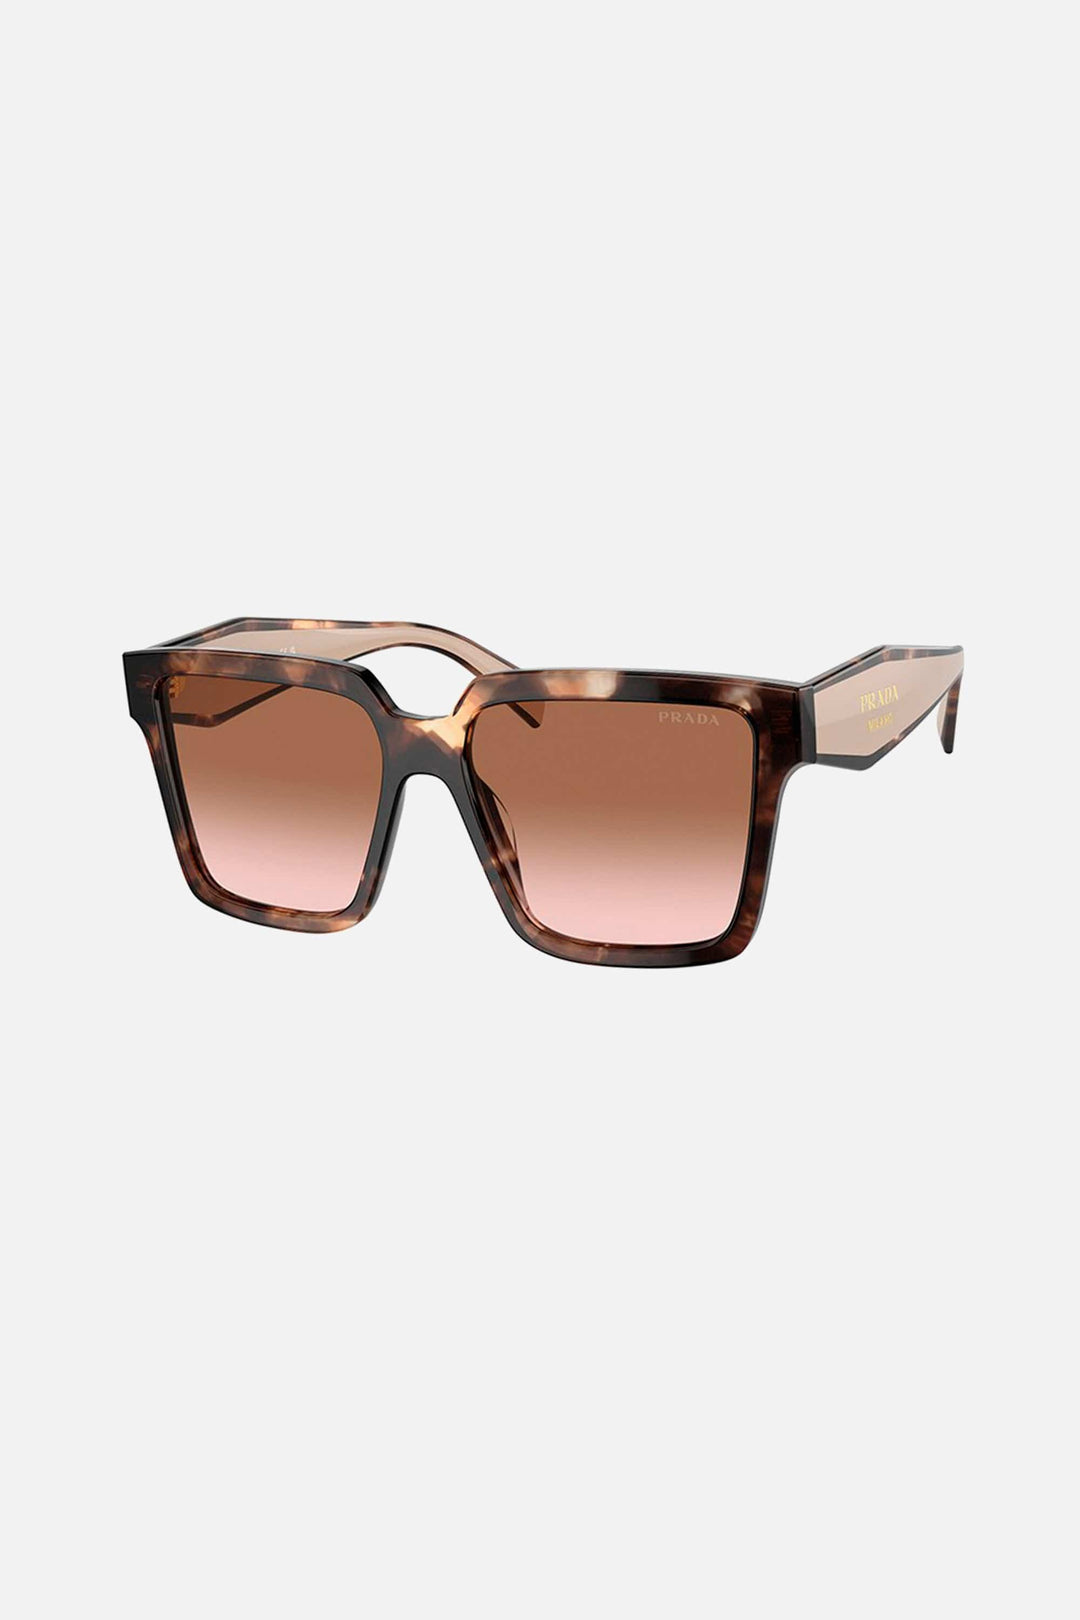 Prada PR 24ZS over cat eye havana and pink sunglasses - Eyewear Club